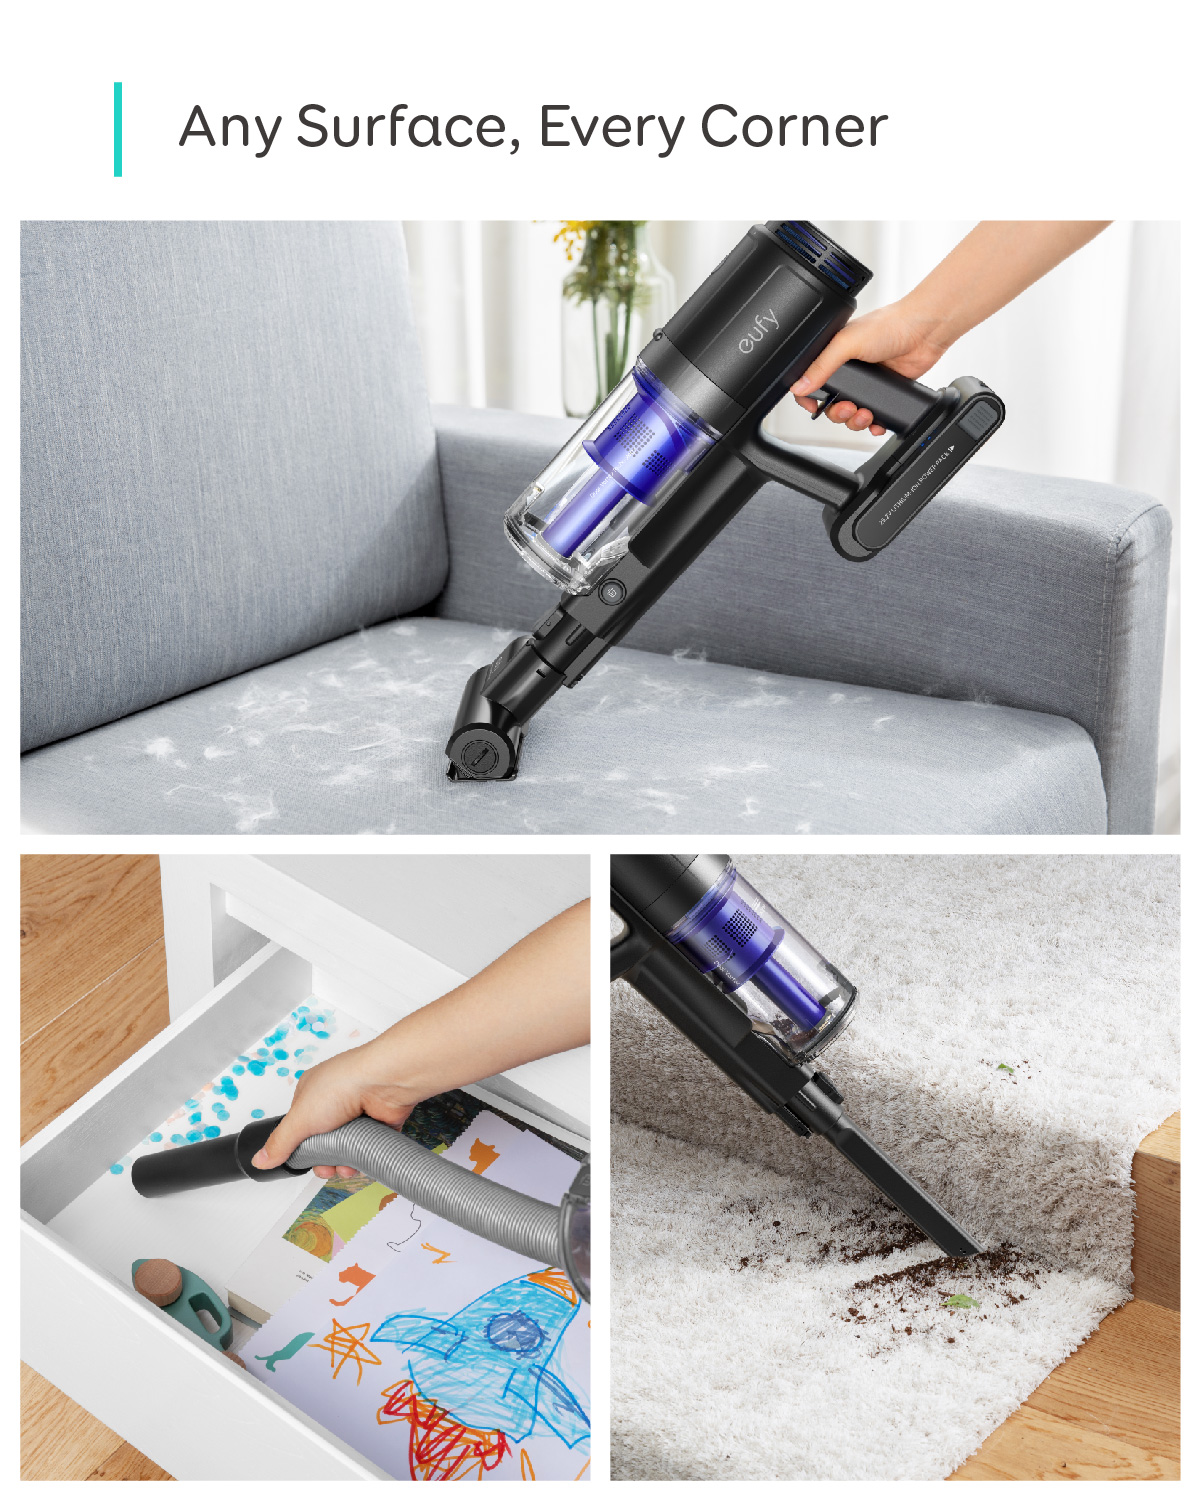 Anker eufy HomeVac S11 Reach, Handstick Vaccum Cleaner - image 4 of 8